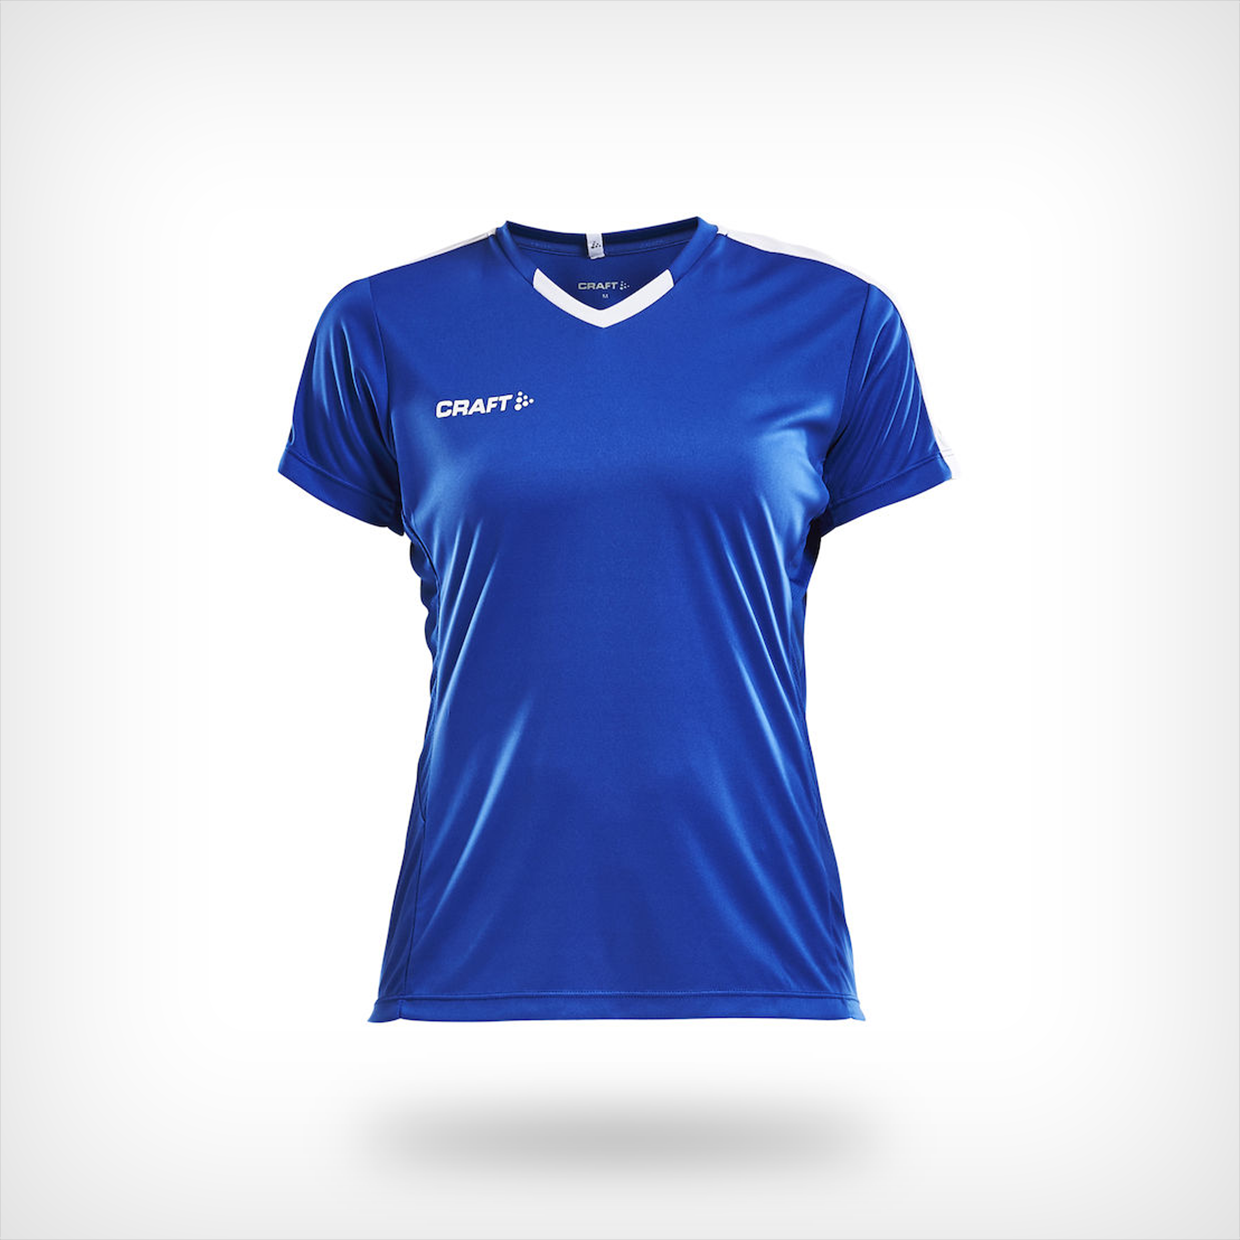 Craft Progress Contrast shirt - FANARTIKEL.NL - Uw specialist!